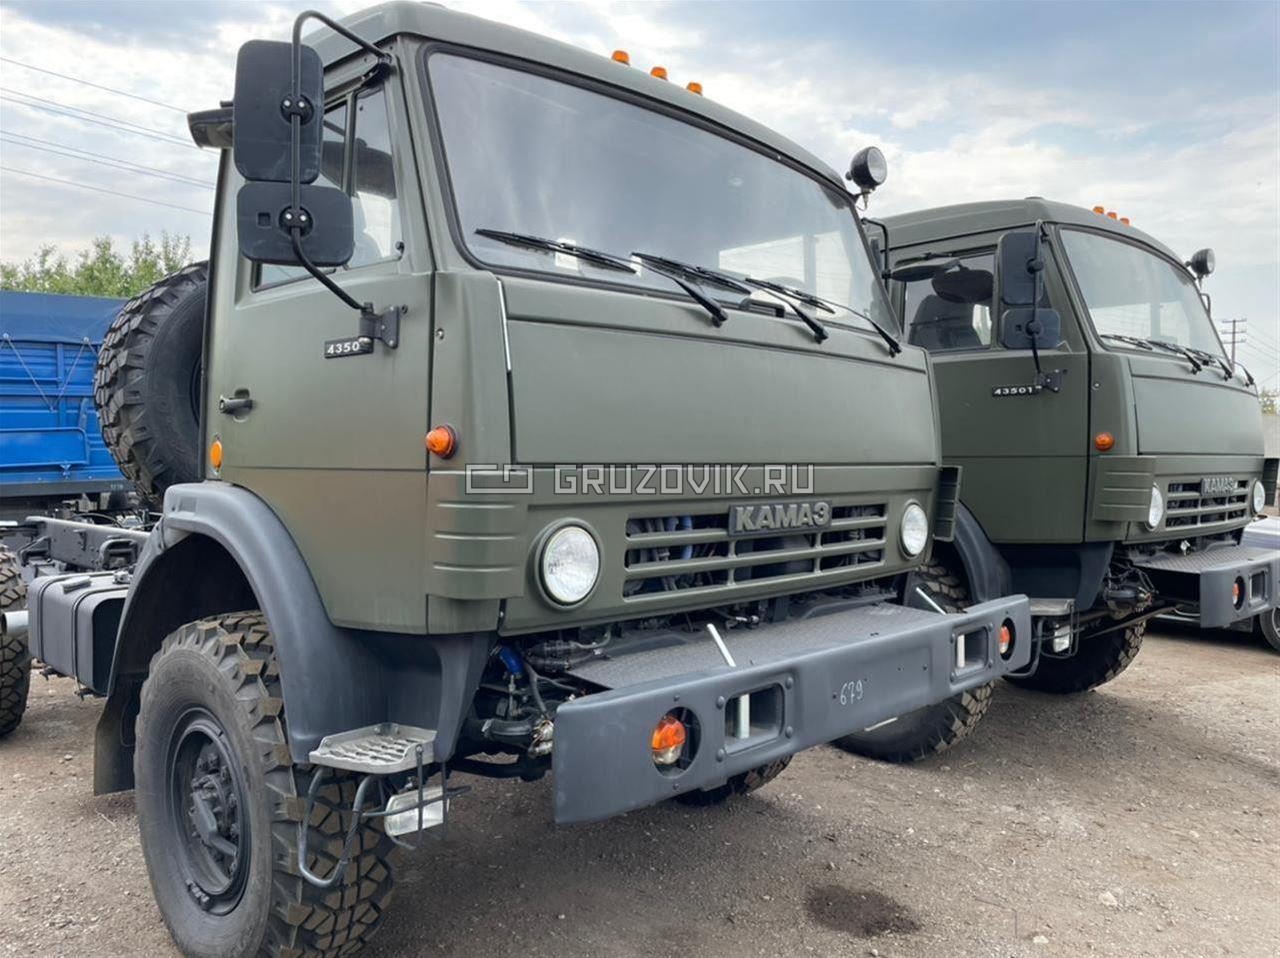 Новый Шасси грузовика  КАМАЗ 4326 в продаже на Gruzovik.ru, 3 950 000 ₽